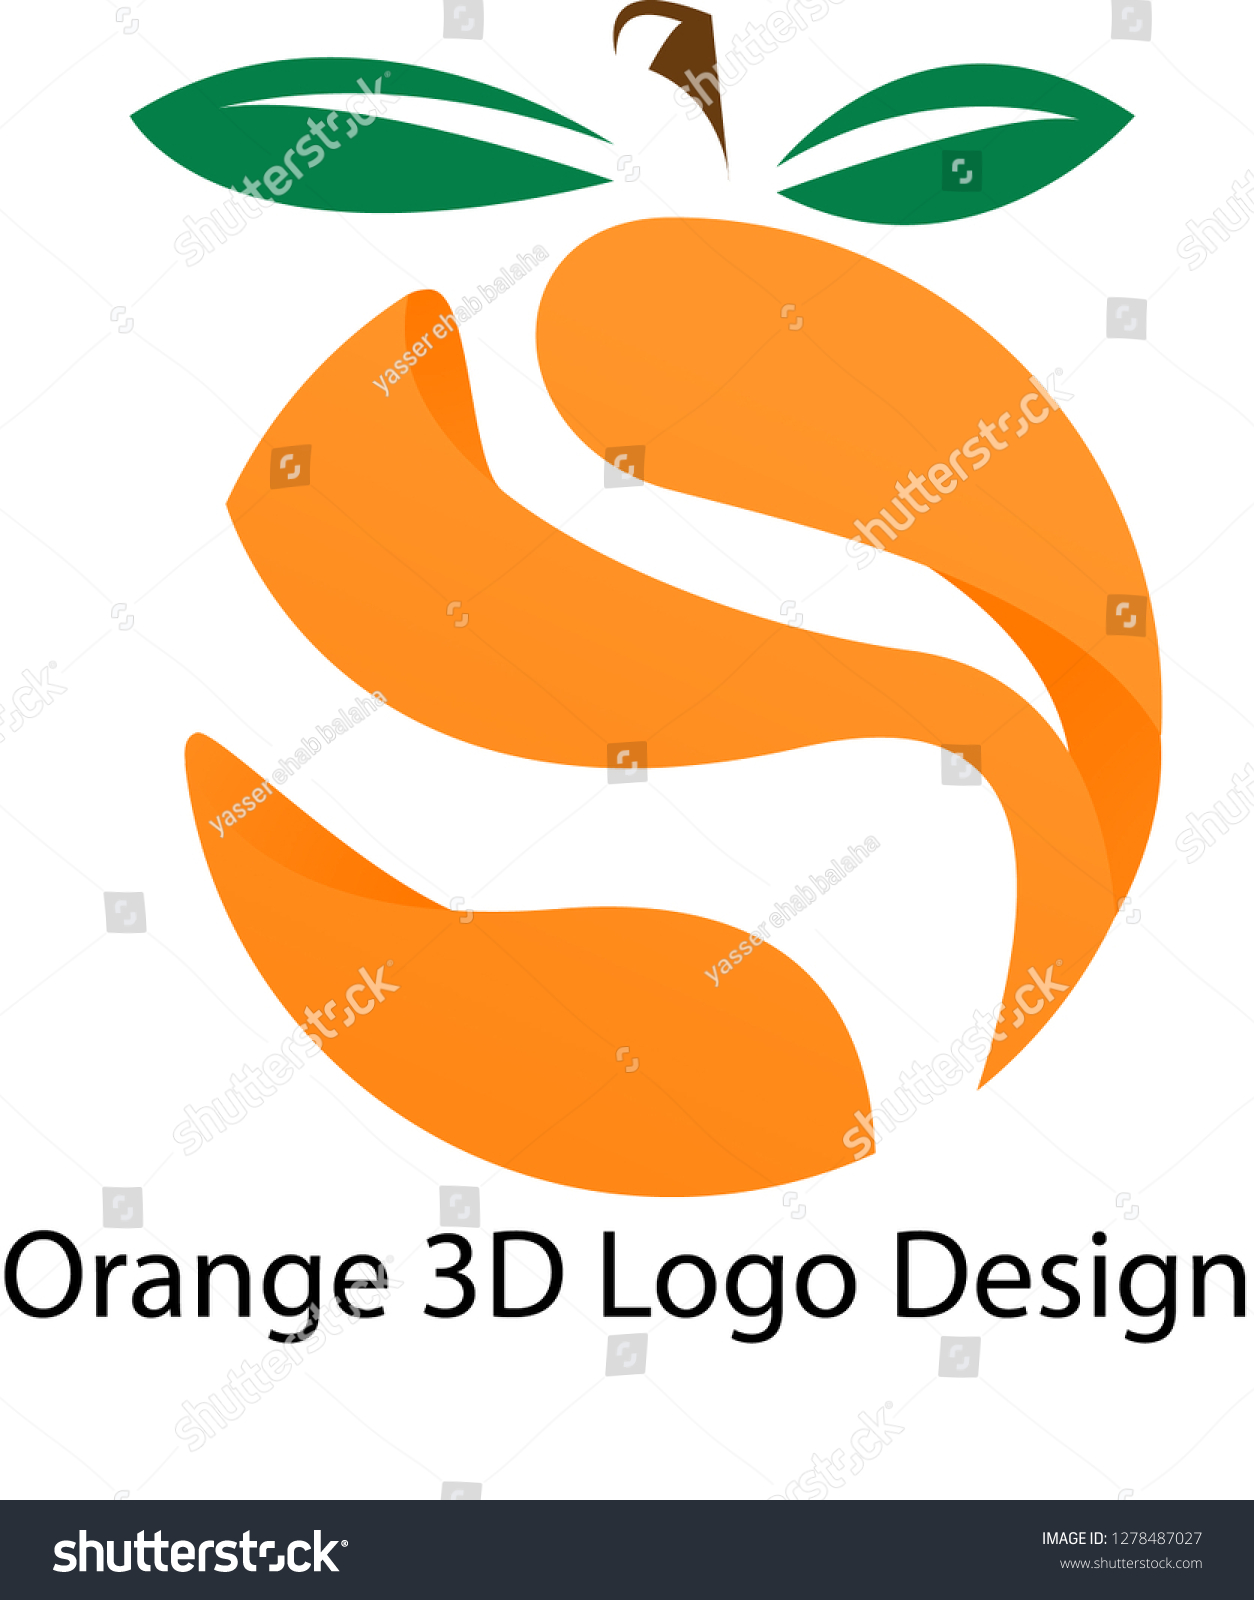 Illustrator Logo Design Tutorial Orange 3d Stock Vector Royalty Free